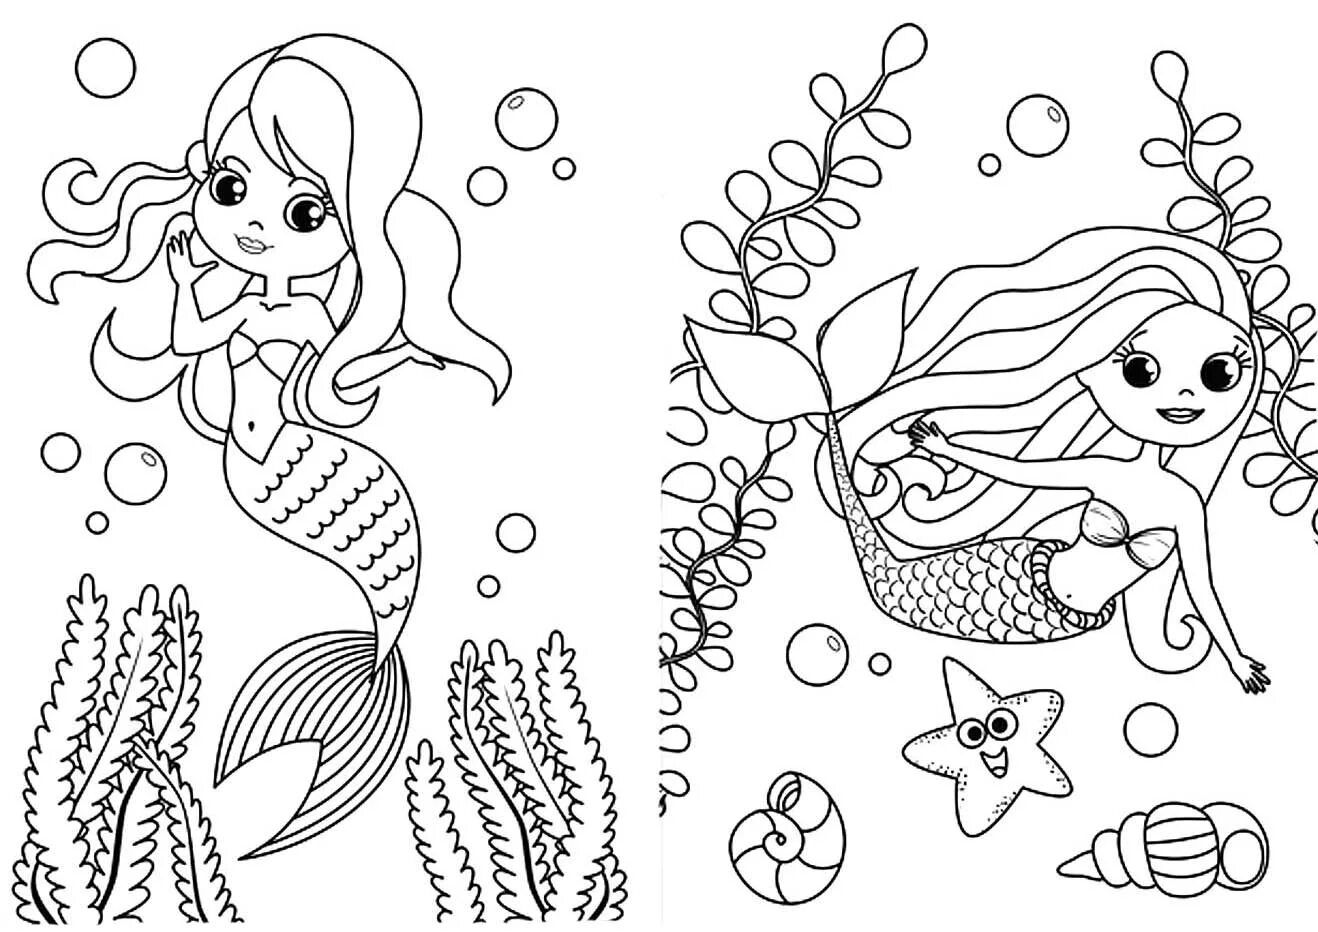 Mermaid games for girls #4